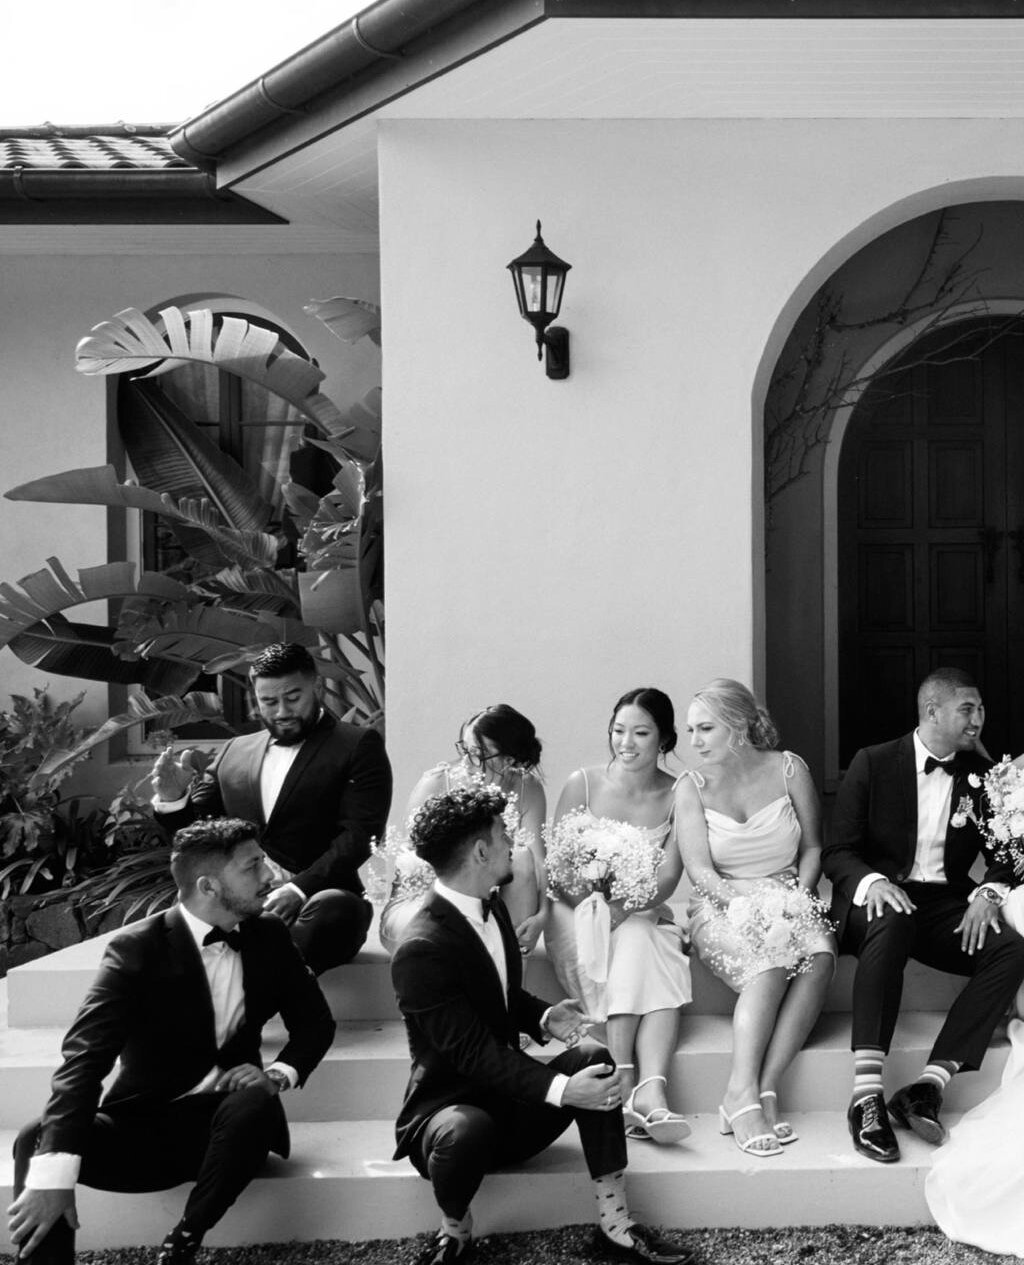 Jasmine &amp; Jordan with their entourage 🖤 ⁠
⁠
#curateweddings #nzweddings #weddingphotography